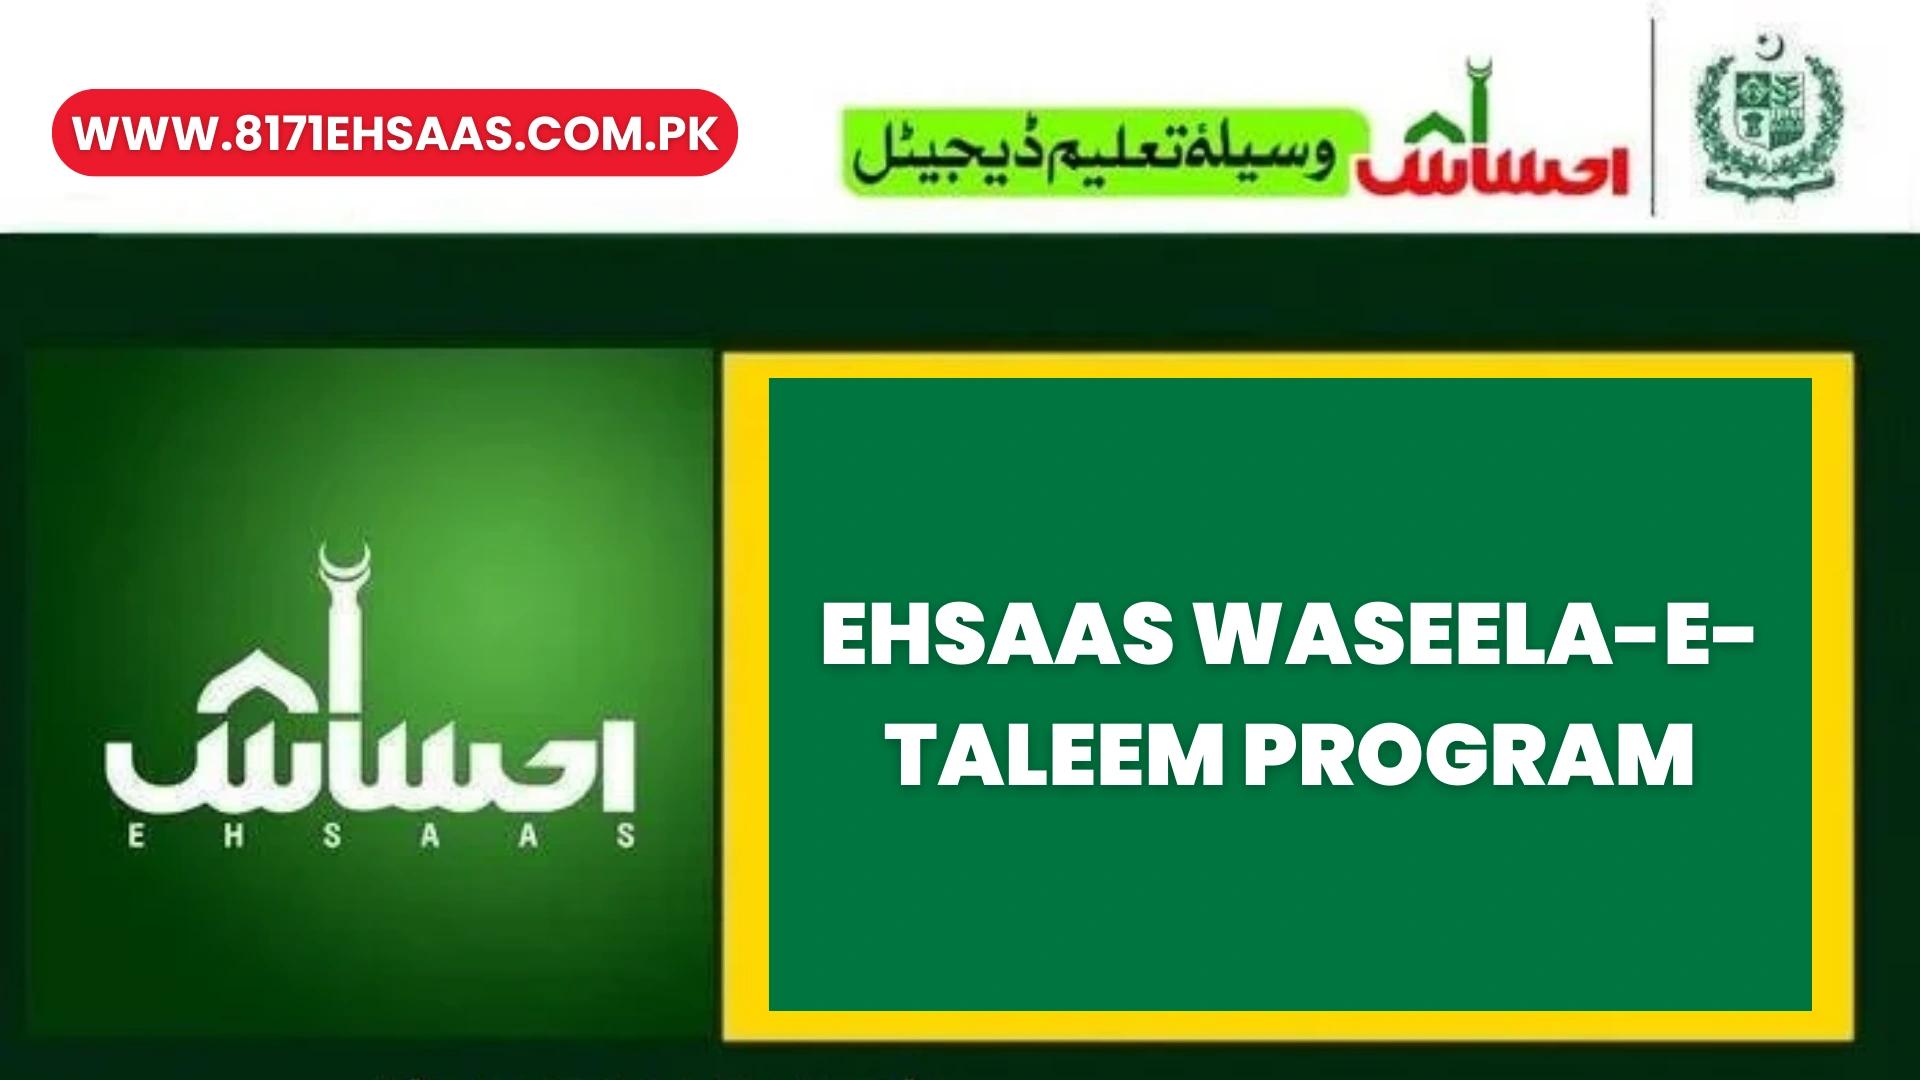 Ehsaas Waseela-e-Taleem Program